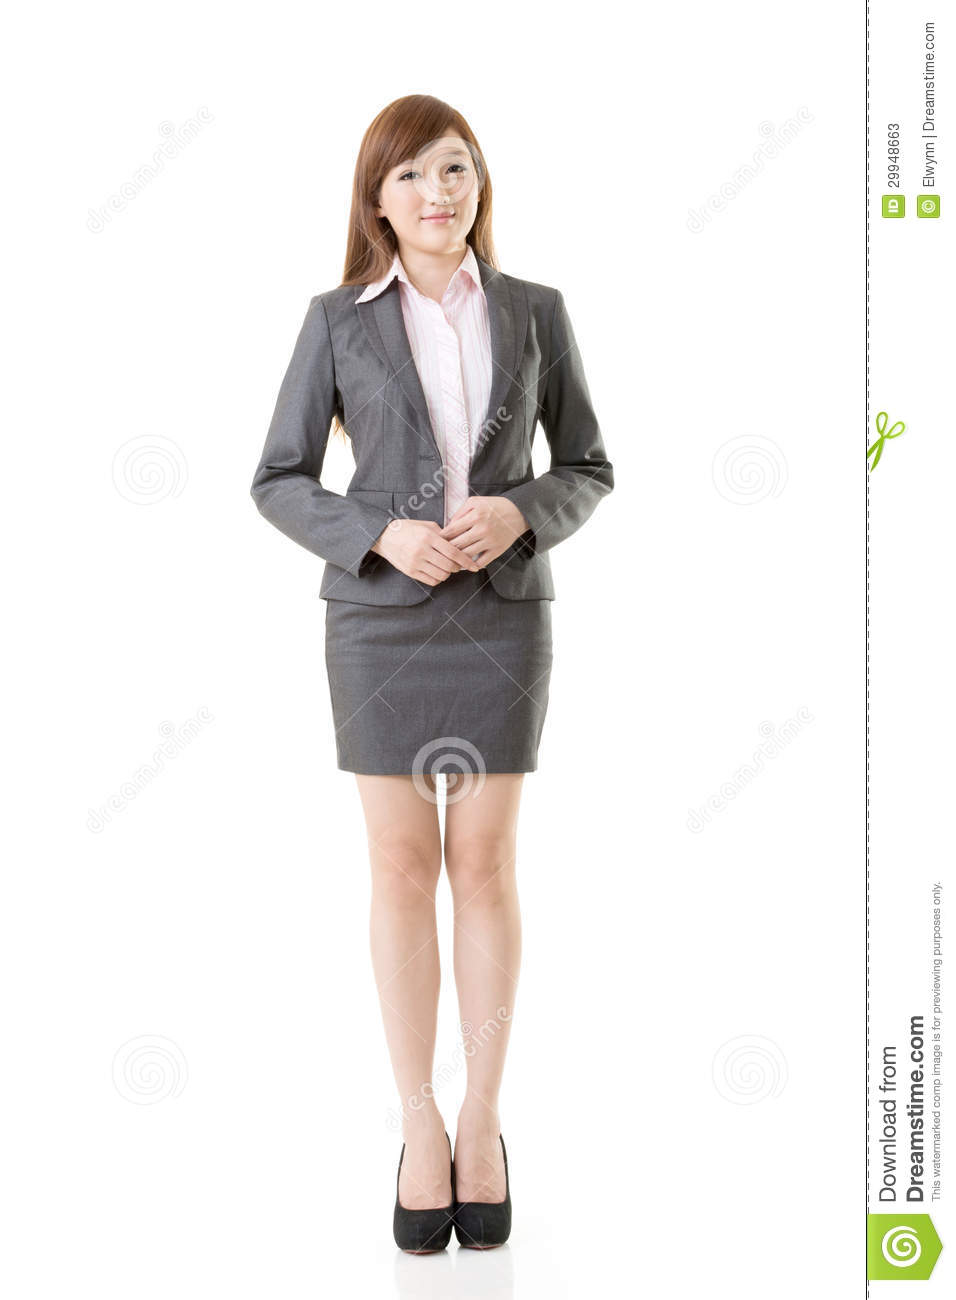 Length Portrait Of Asian Business Woman Stock Photos   Image  29948663